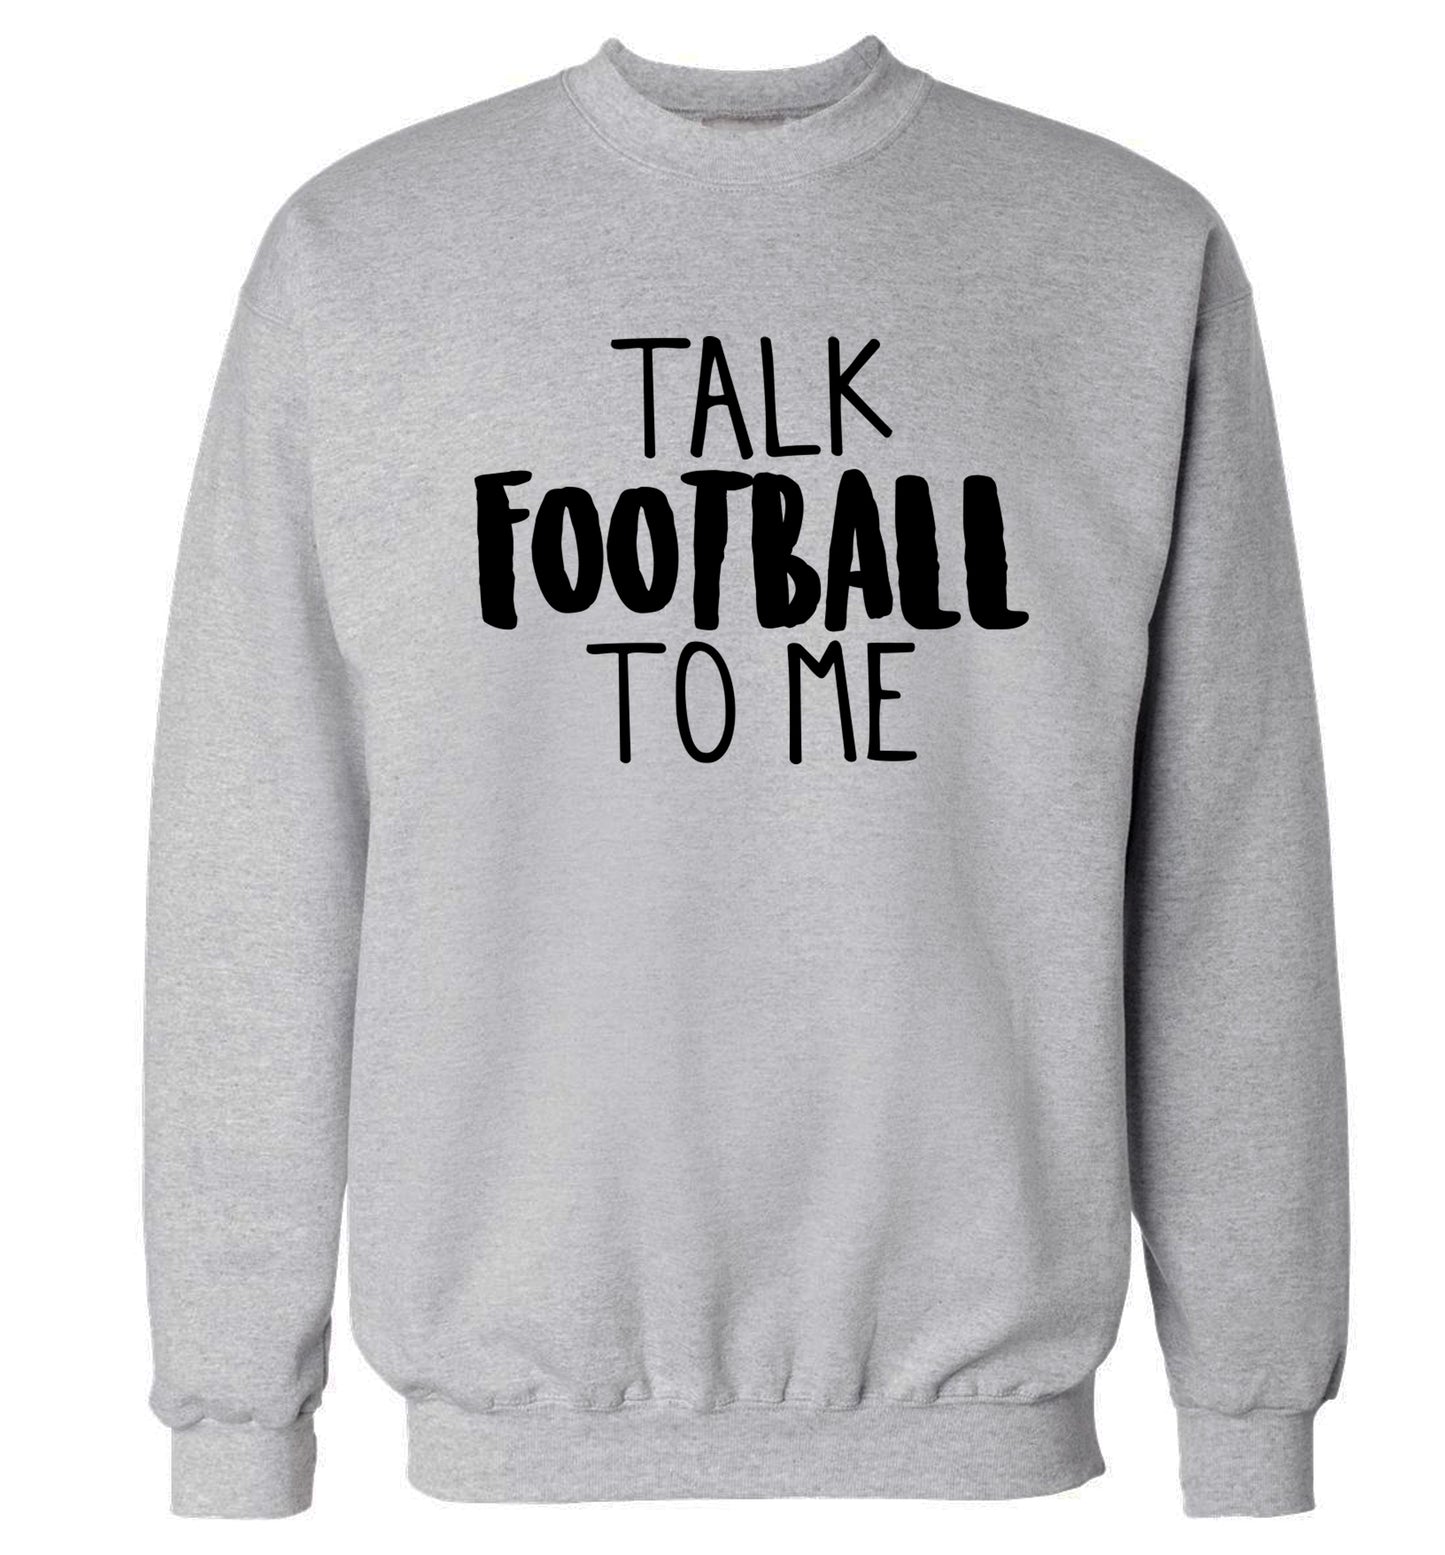 Talk football to me Adult's unisexgrey Sweater 2XL